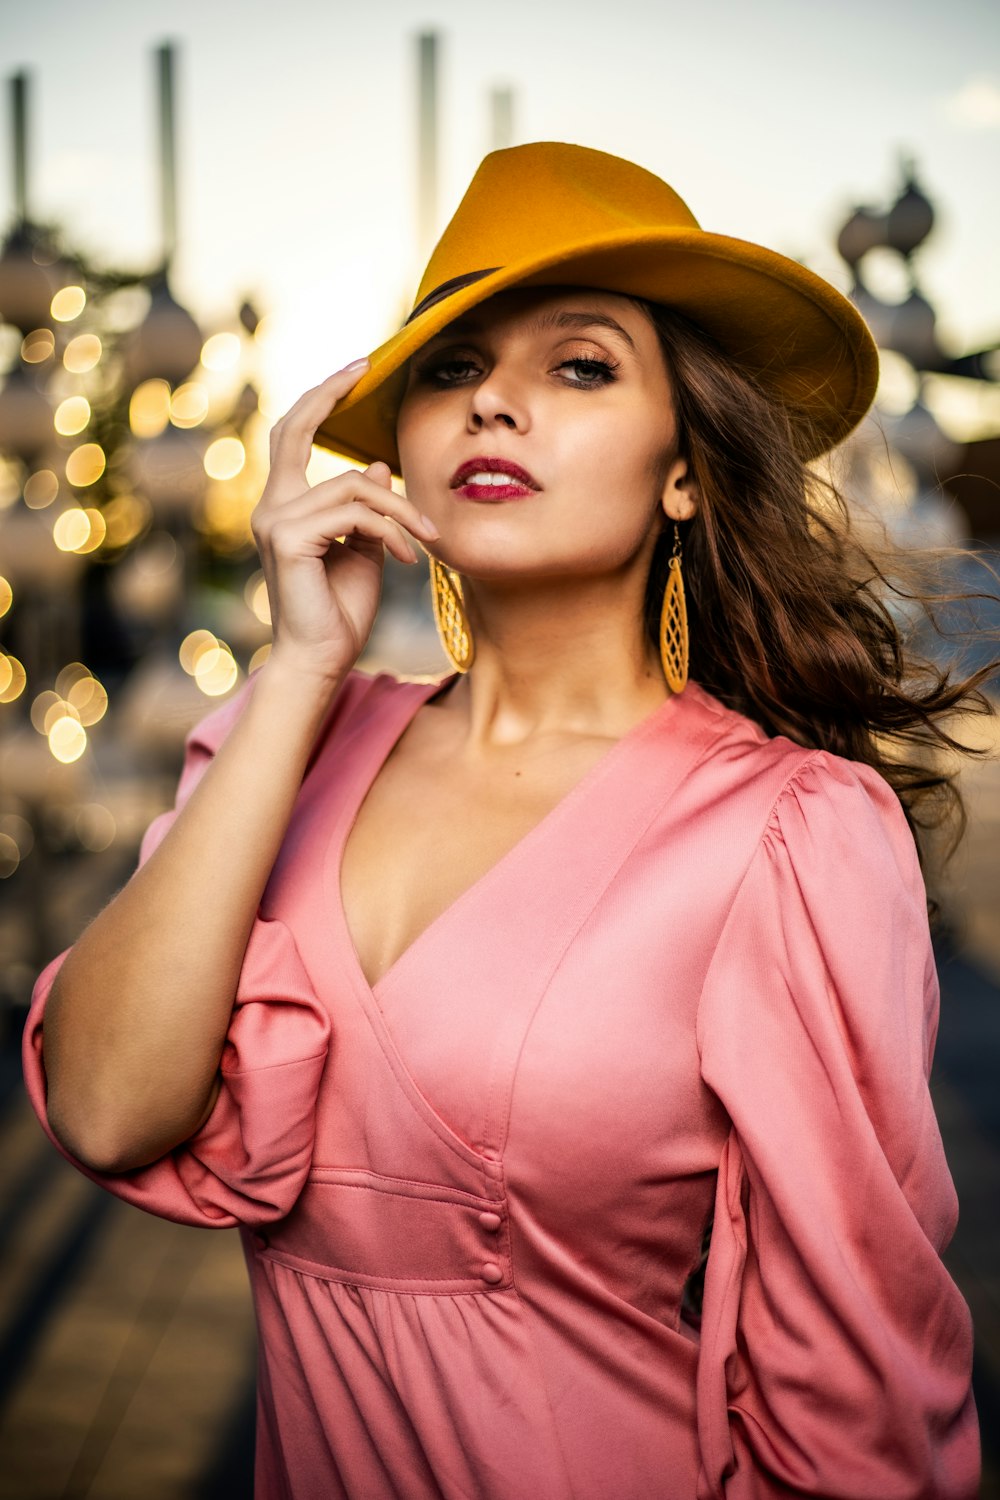 Frau im rosa V-Ausschnitt-Hemd mit braunem Hut